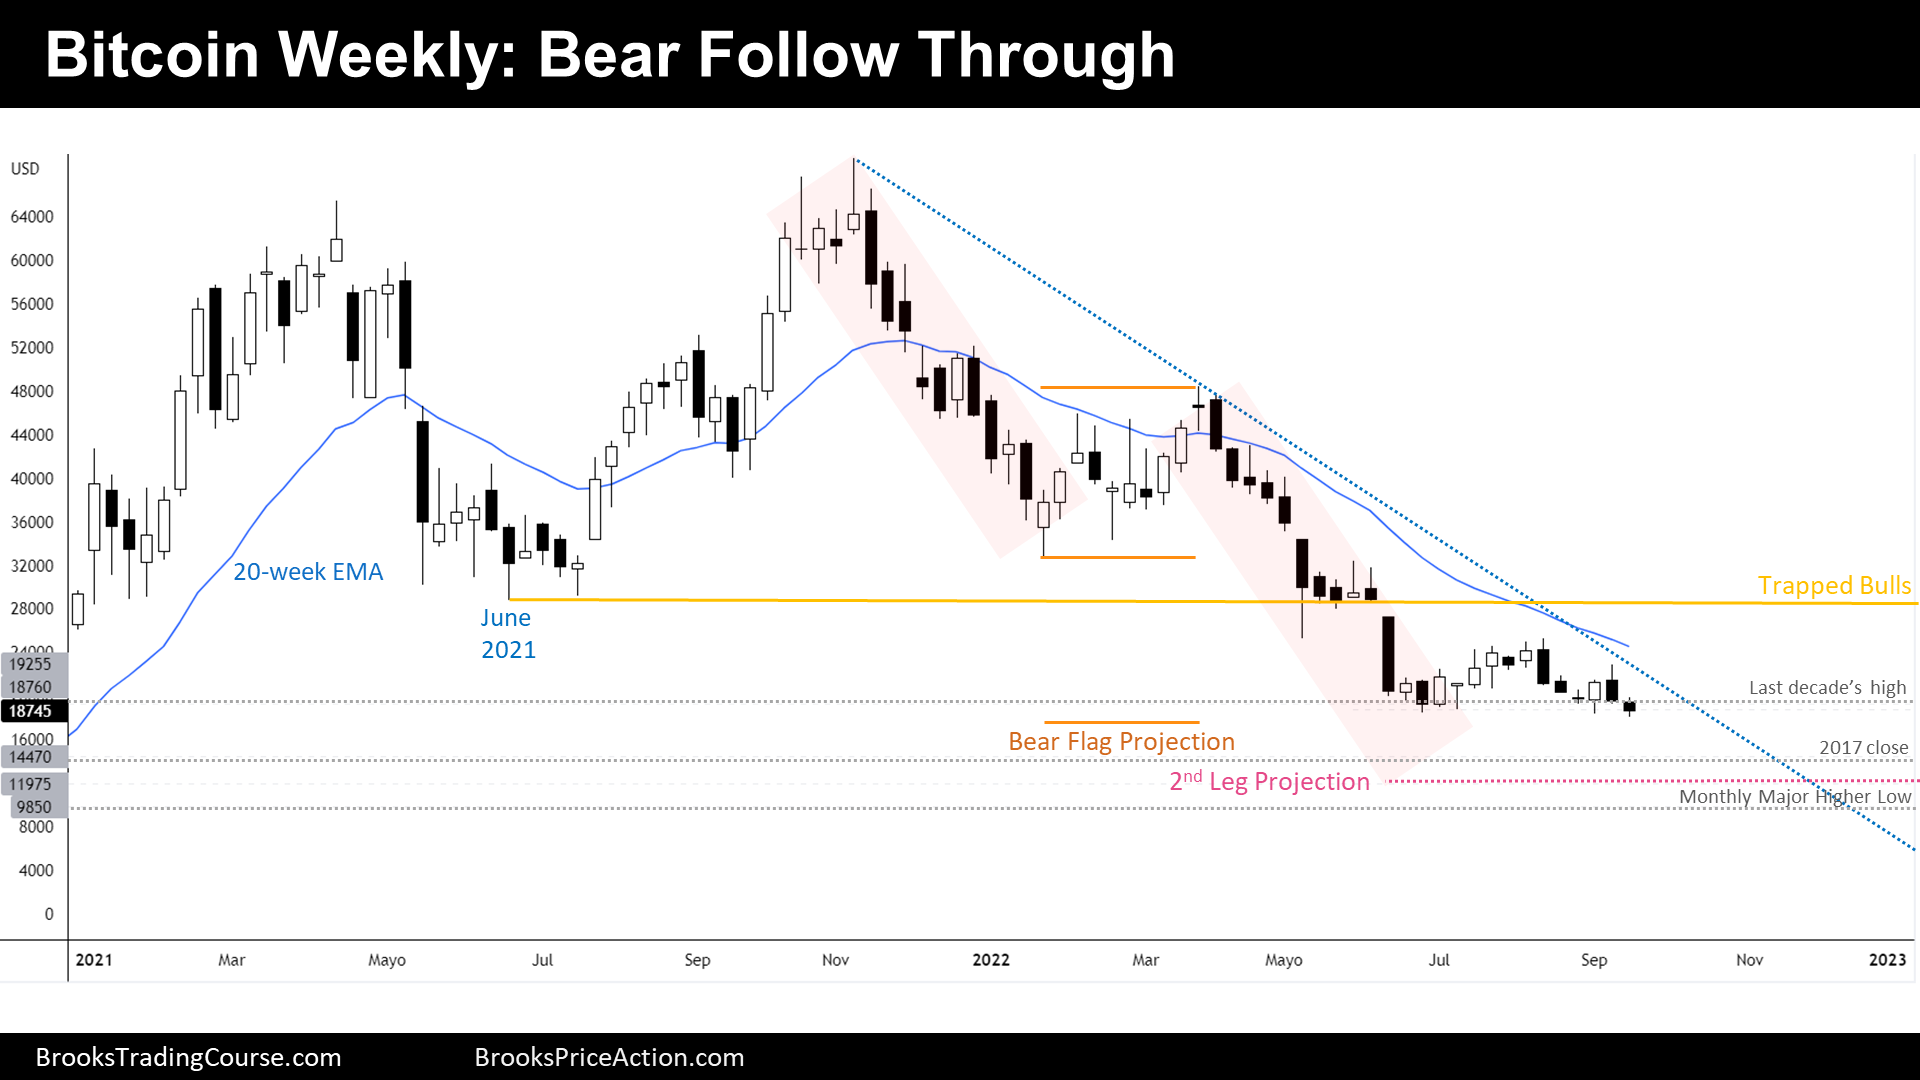 Bbitcoin Weekly Chart Bear Follow Through with Bitcoin Downside Risks